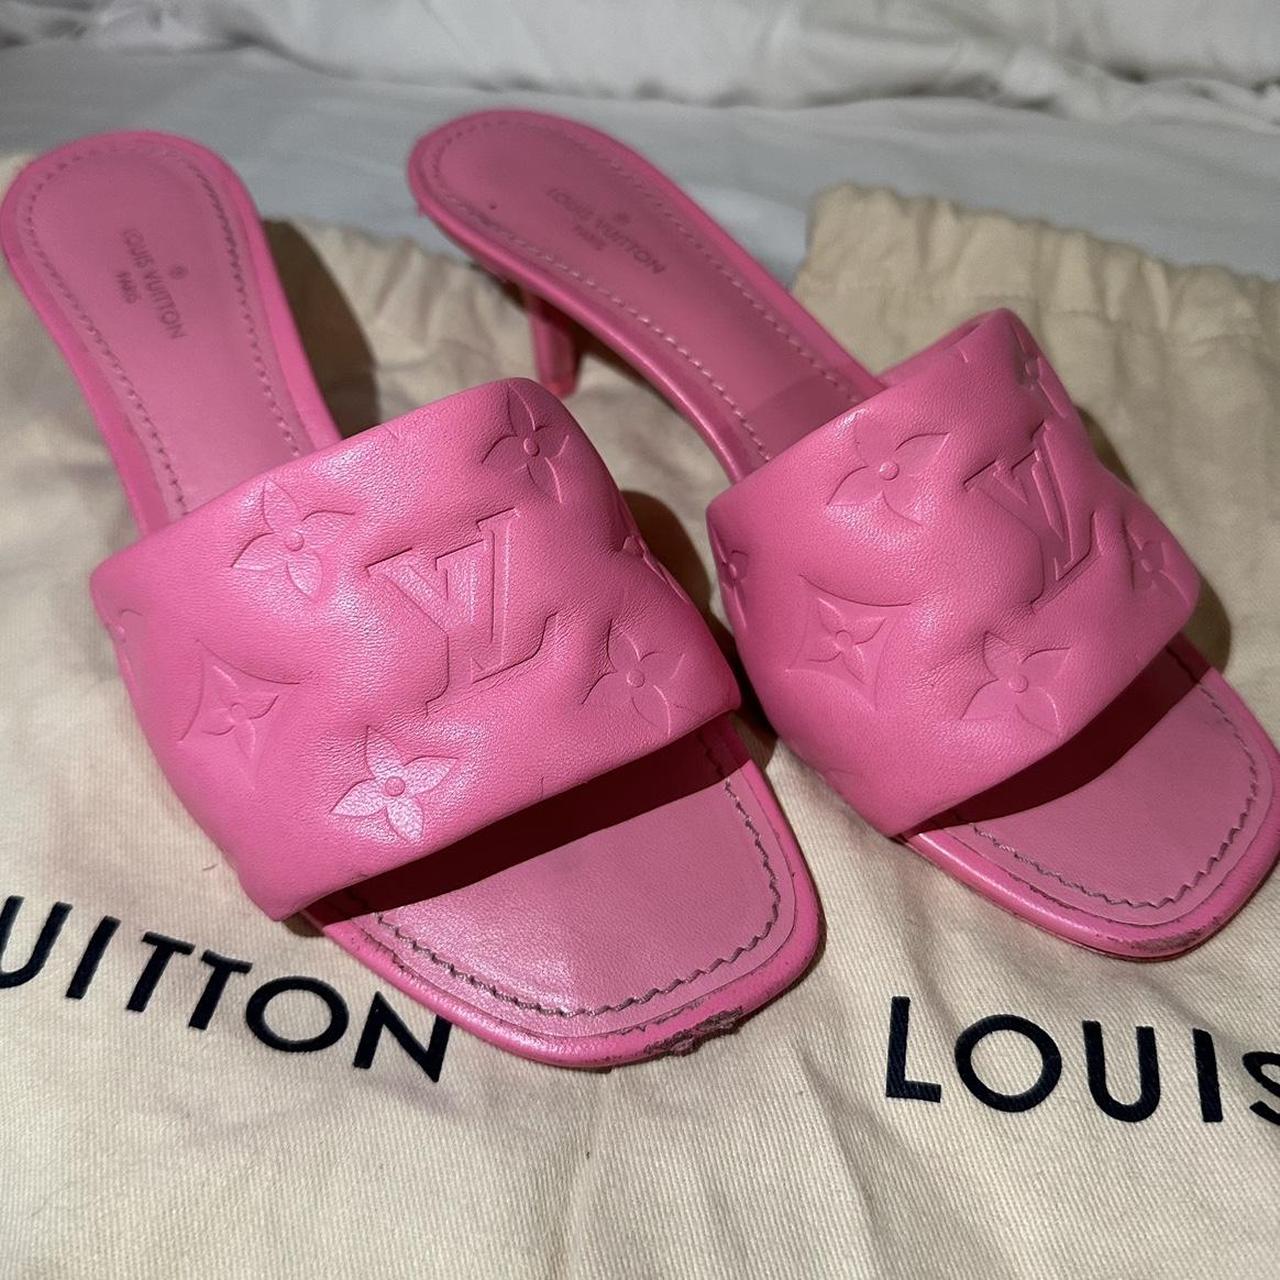 Louis Vuitton slides - Depop